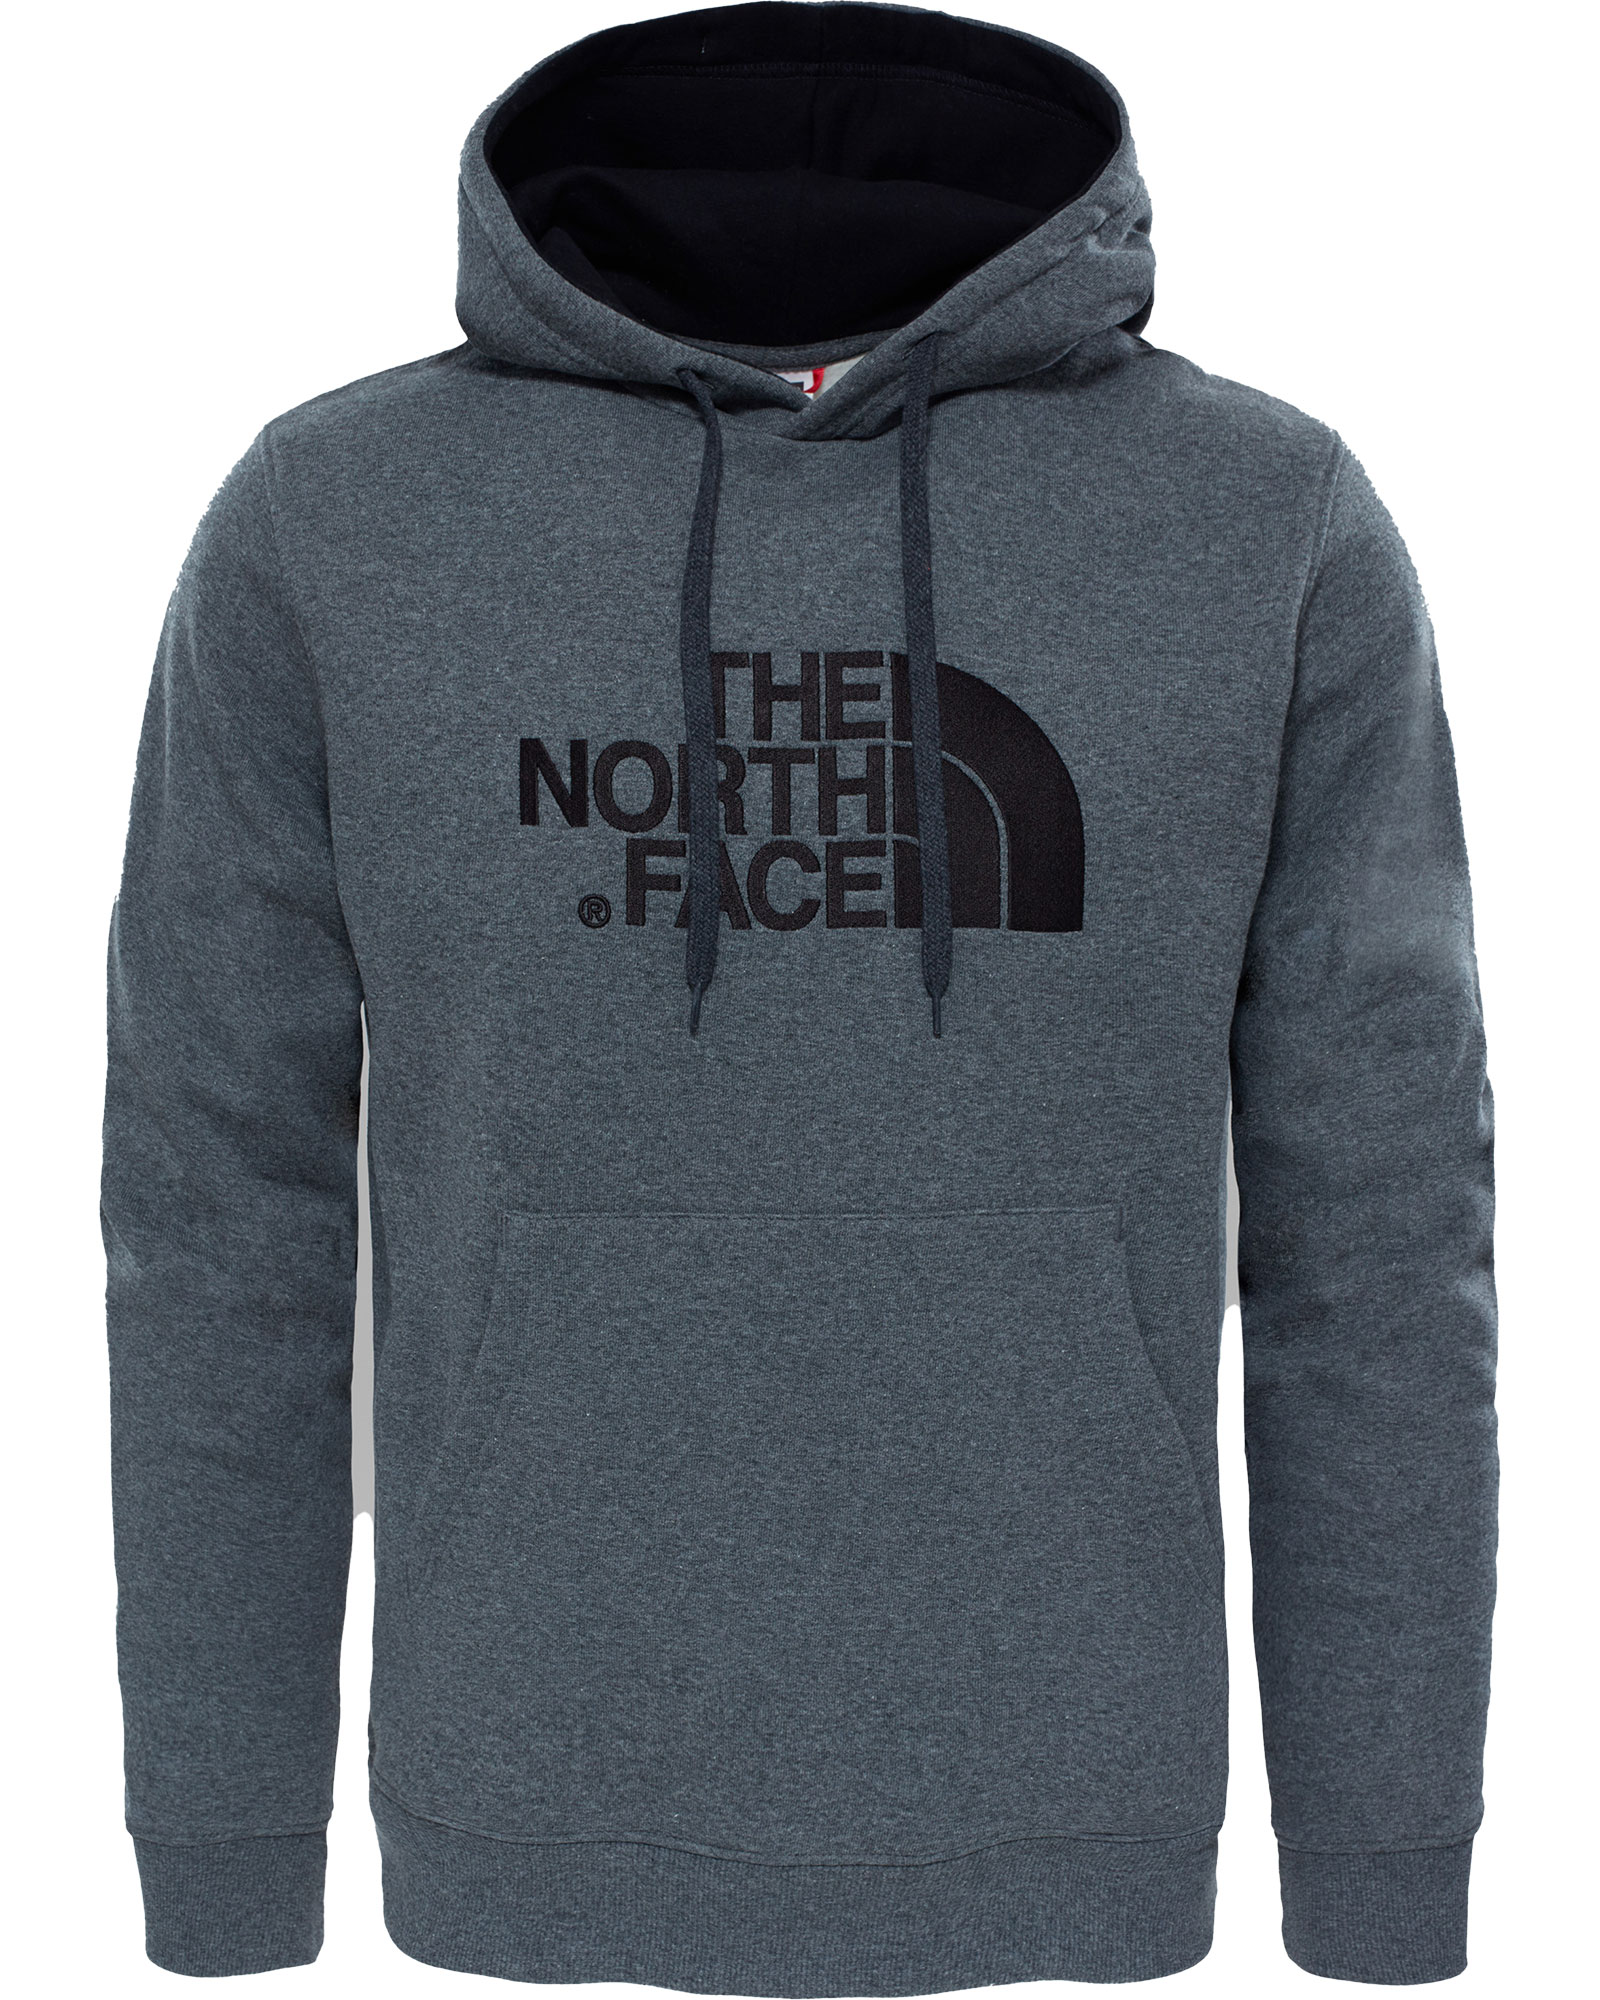 The North Face Drew Peak Men’s Hoodie - TNF Medium Grey Heather XL